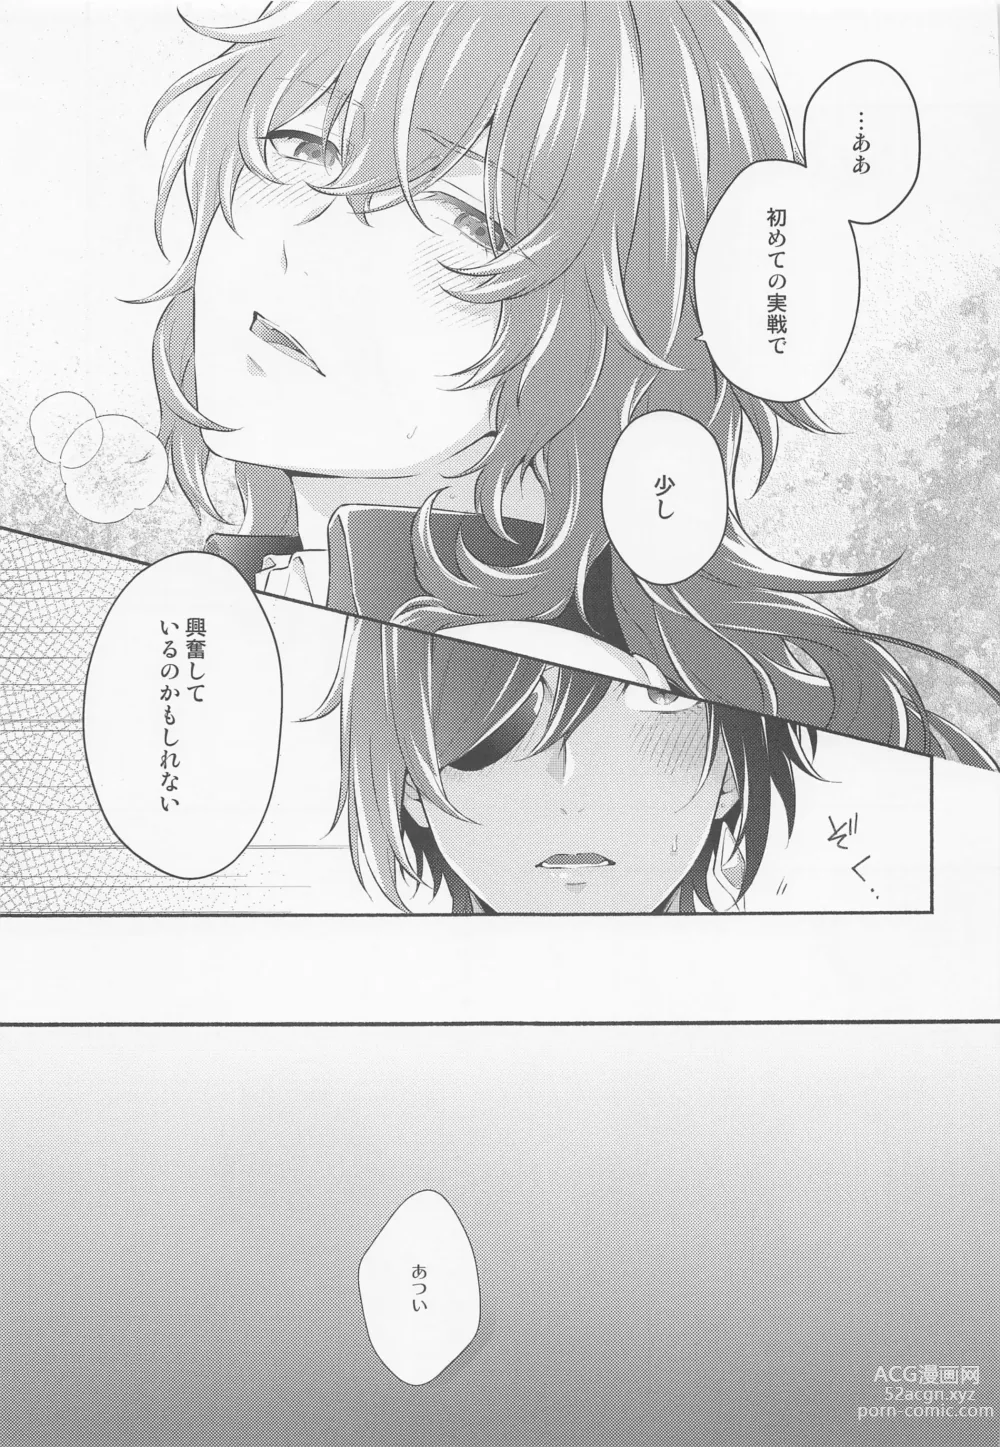 Page 16 of doujinshi Kimi to Yoake o